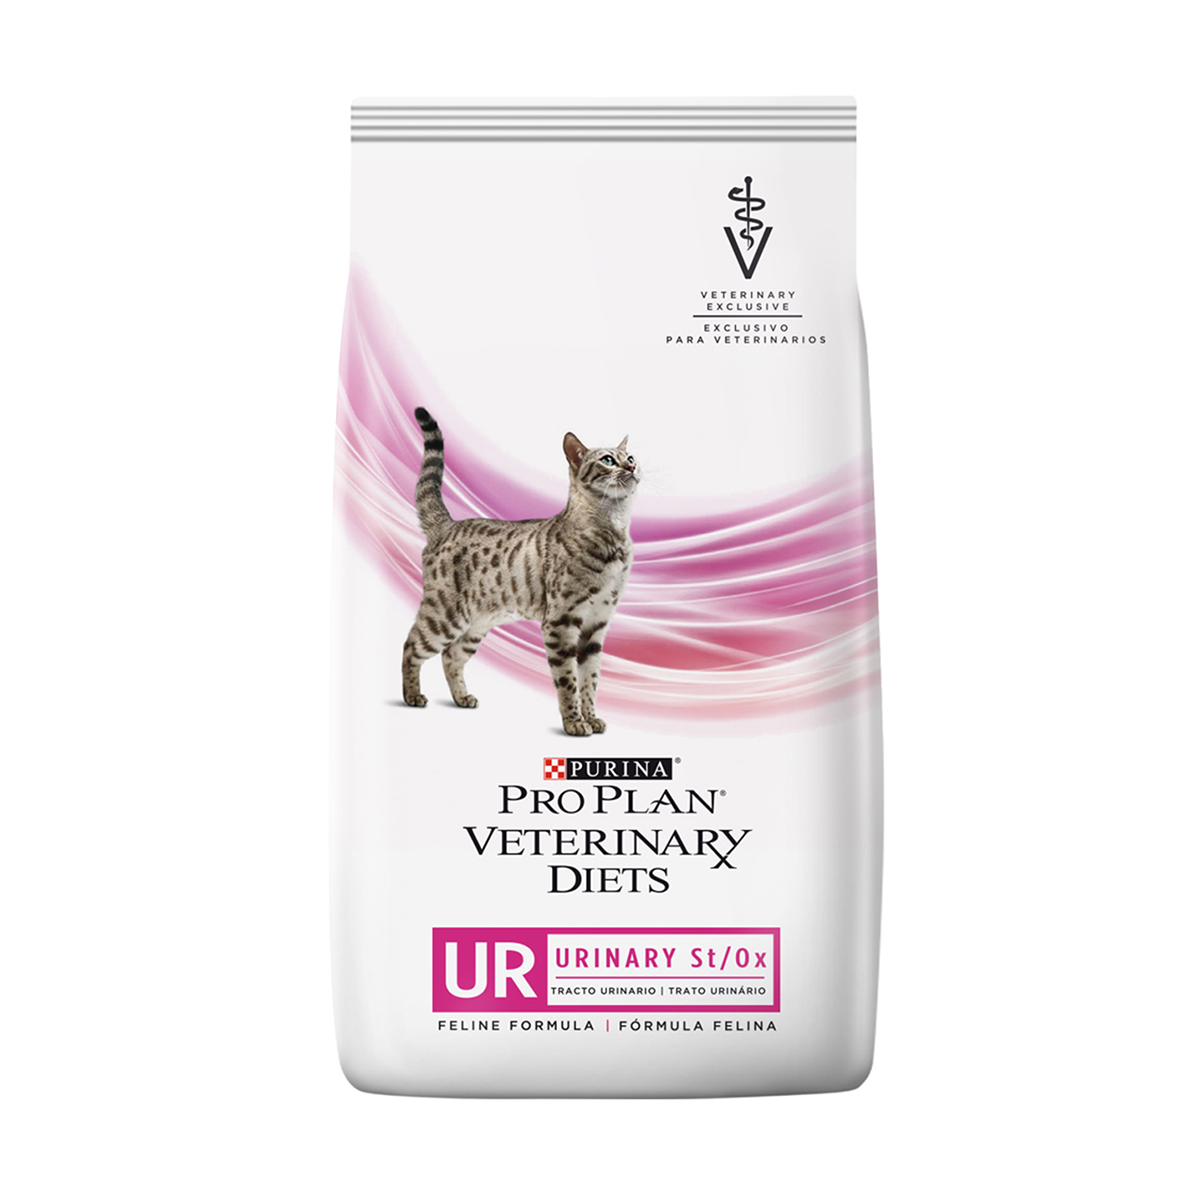 Veterinary-Diets-UR-Urinario-ST-OX-Feline-01_0.png